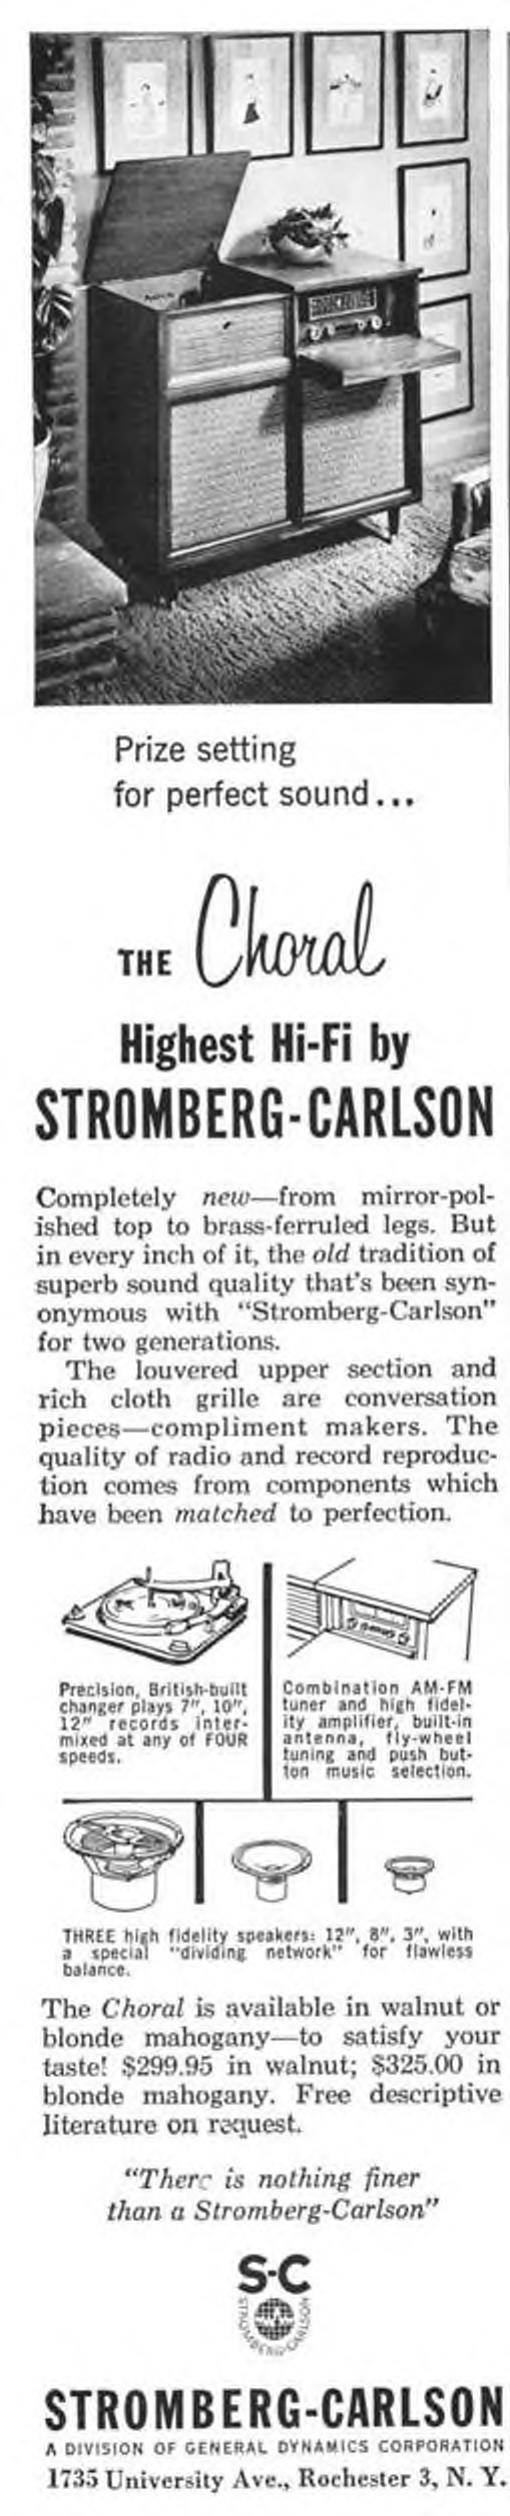 Stromberg-Carlson 1957 5.jpg